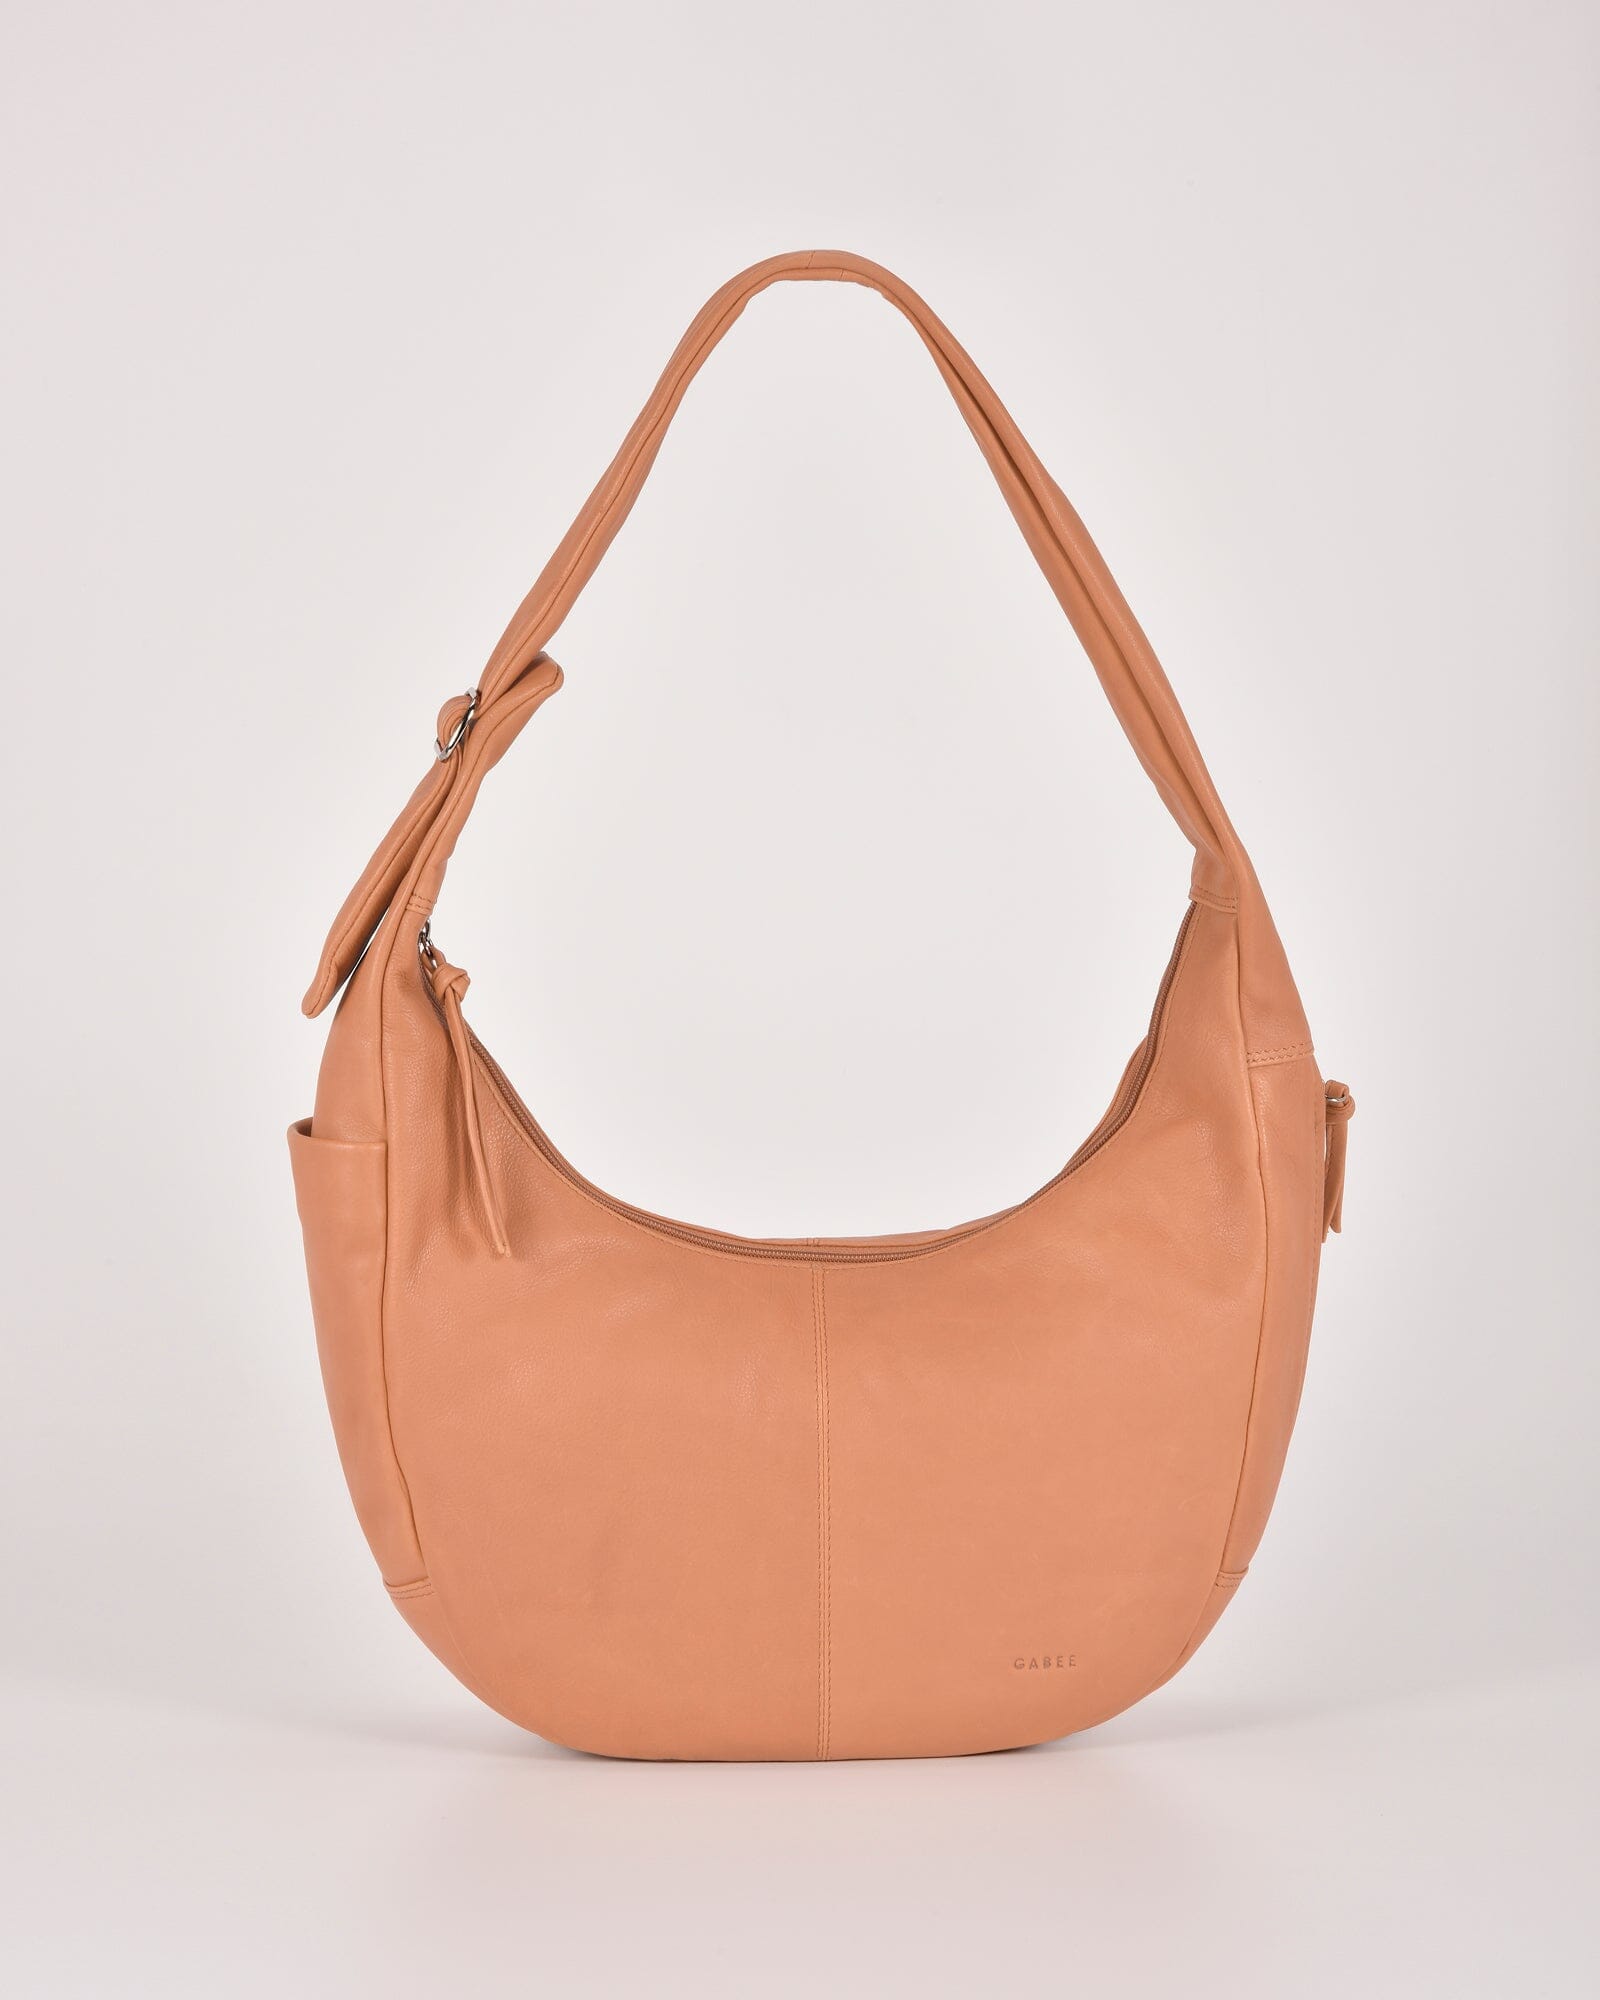 Leather Handbags & Shoulder Bags | LAND Leather Goods